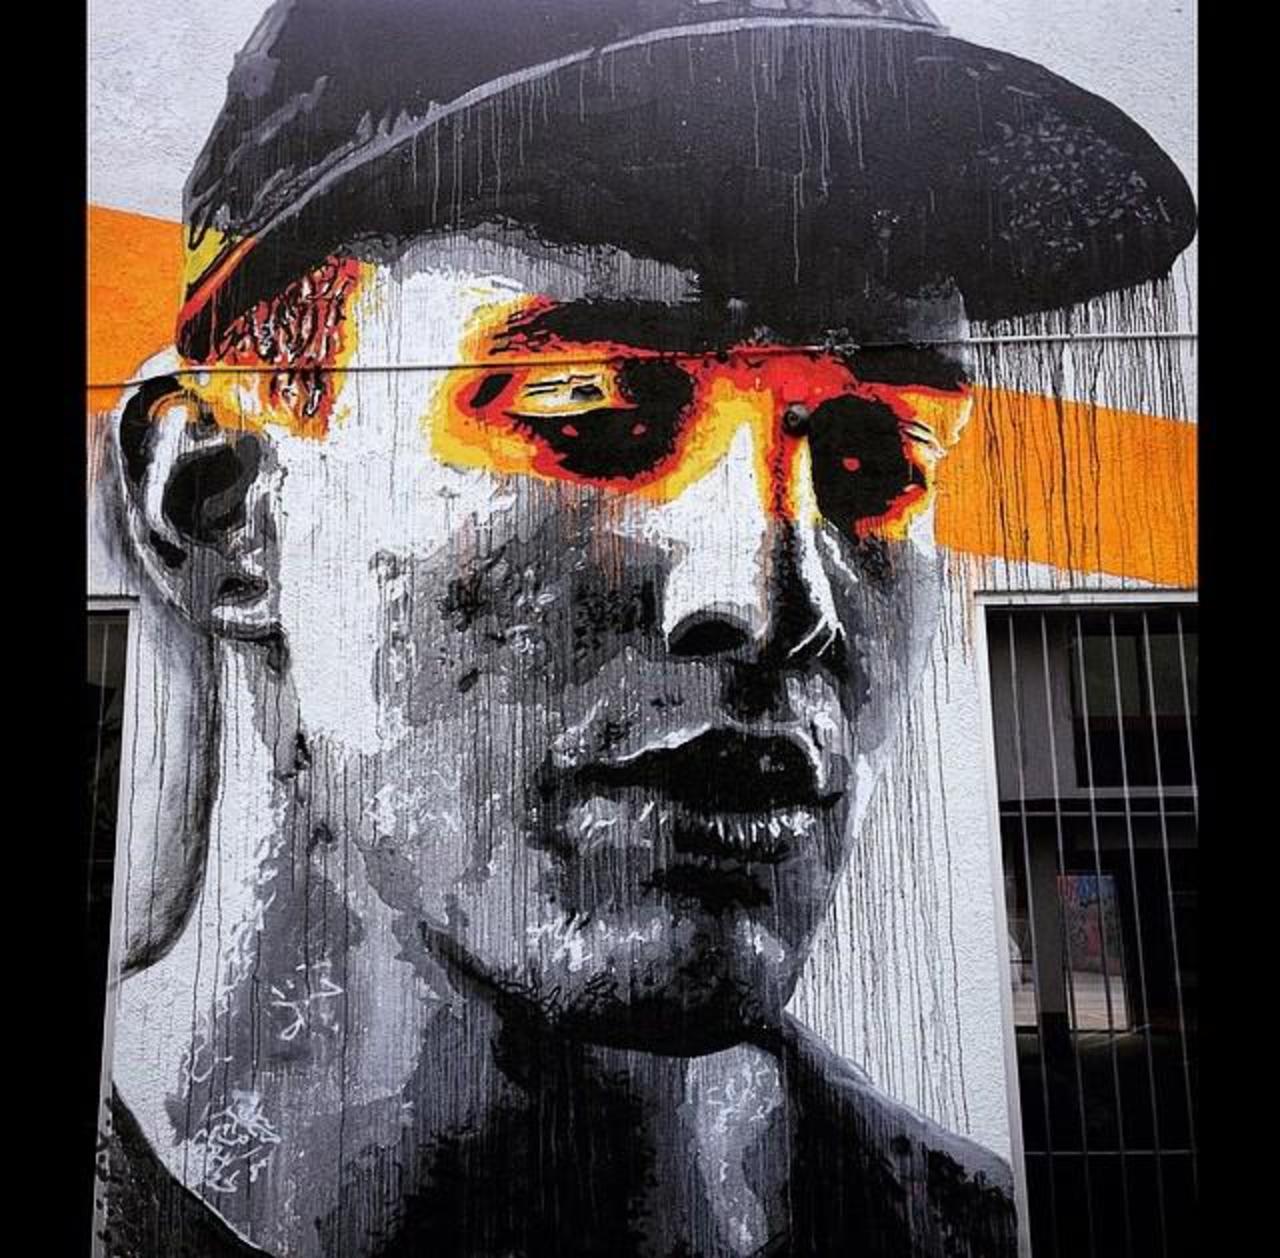 Artist Nils Westergard Street Art portrait in Miami 

#art #graffiti #mural #streetart http://t.co/bk7amlstmb